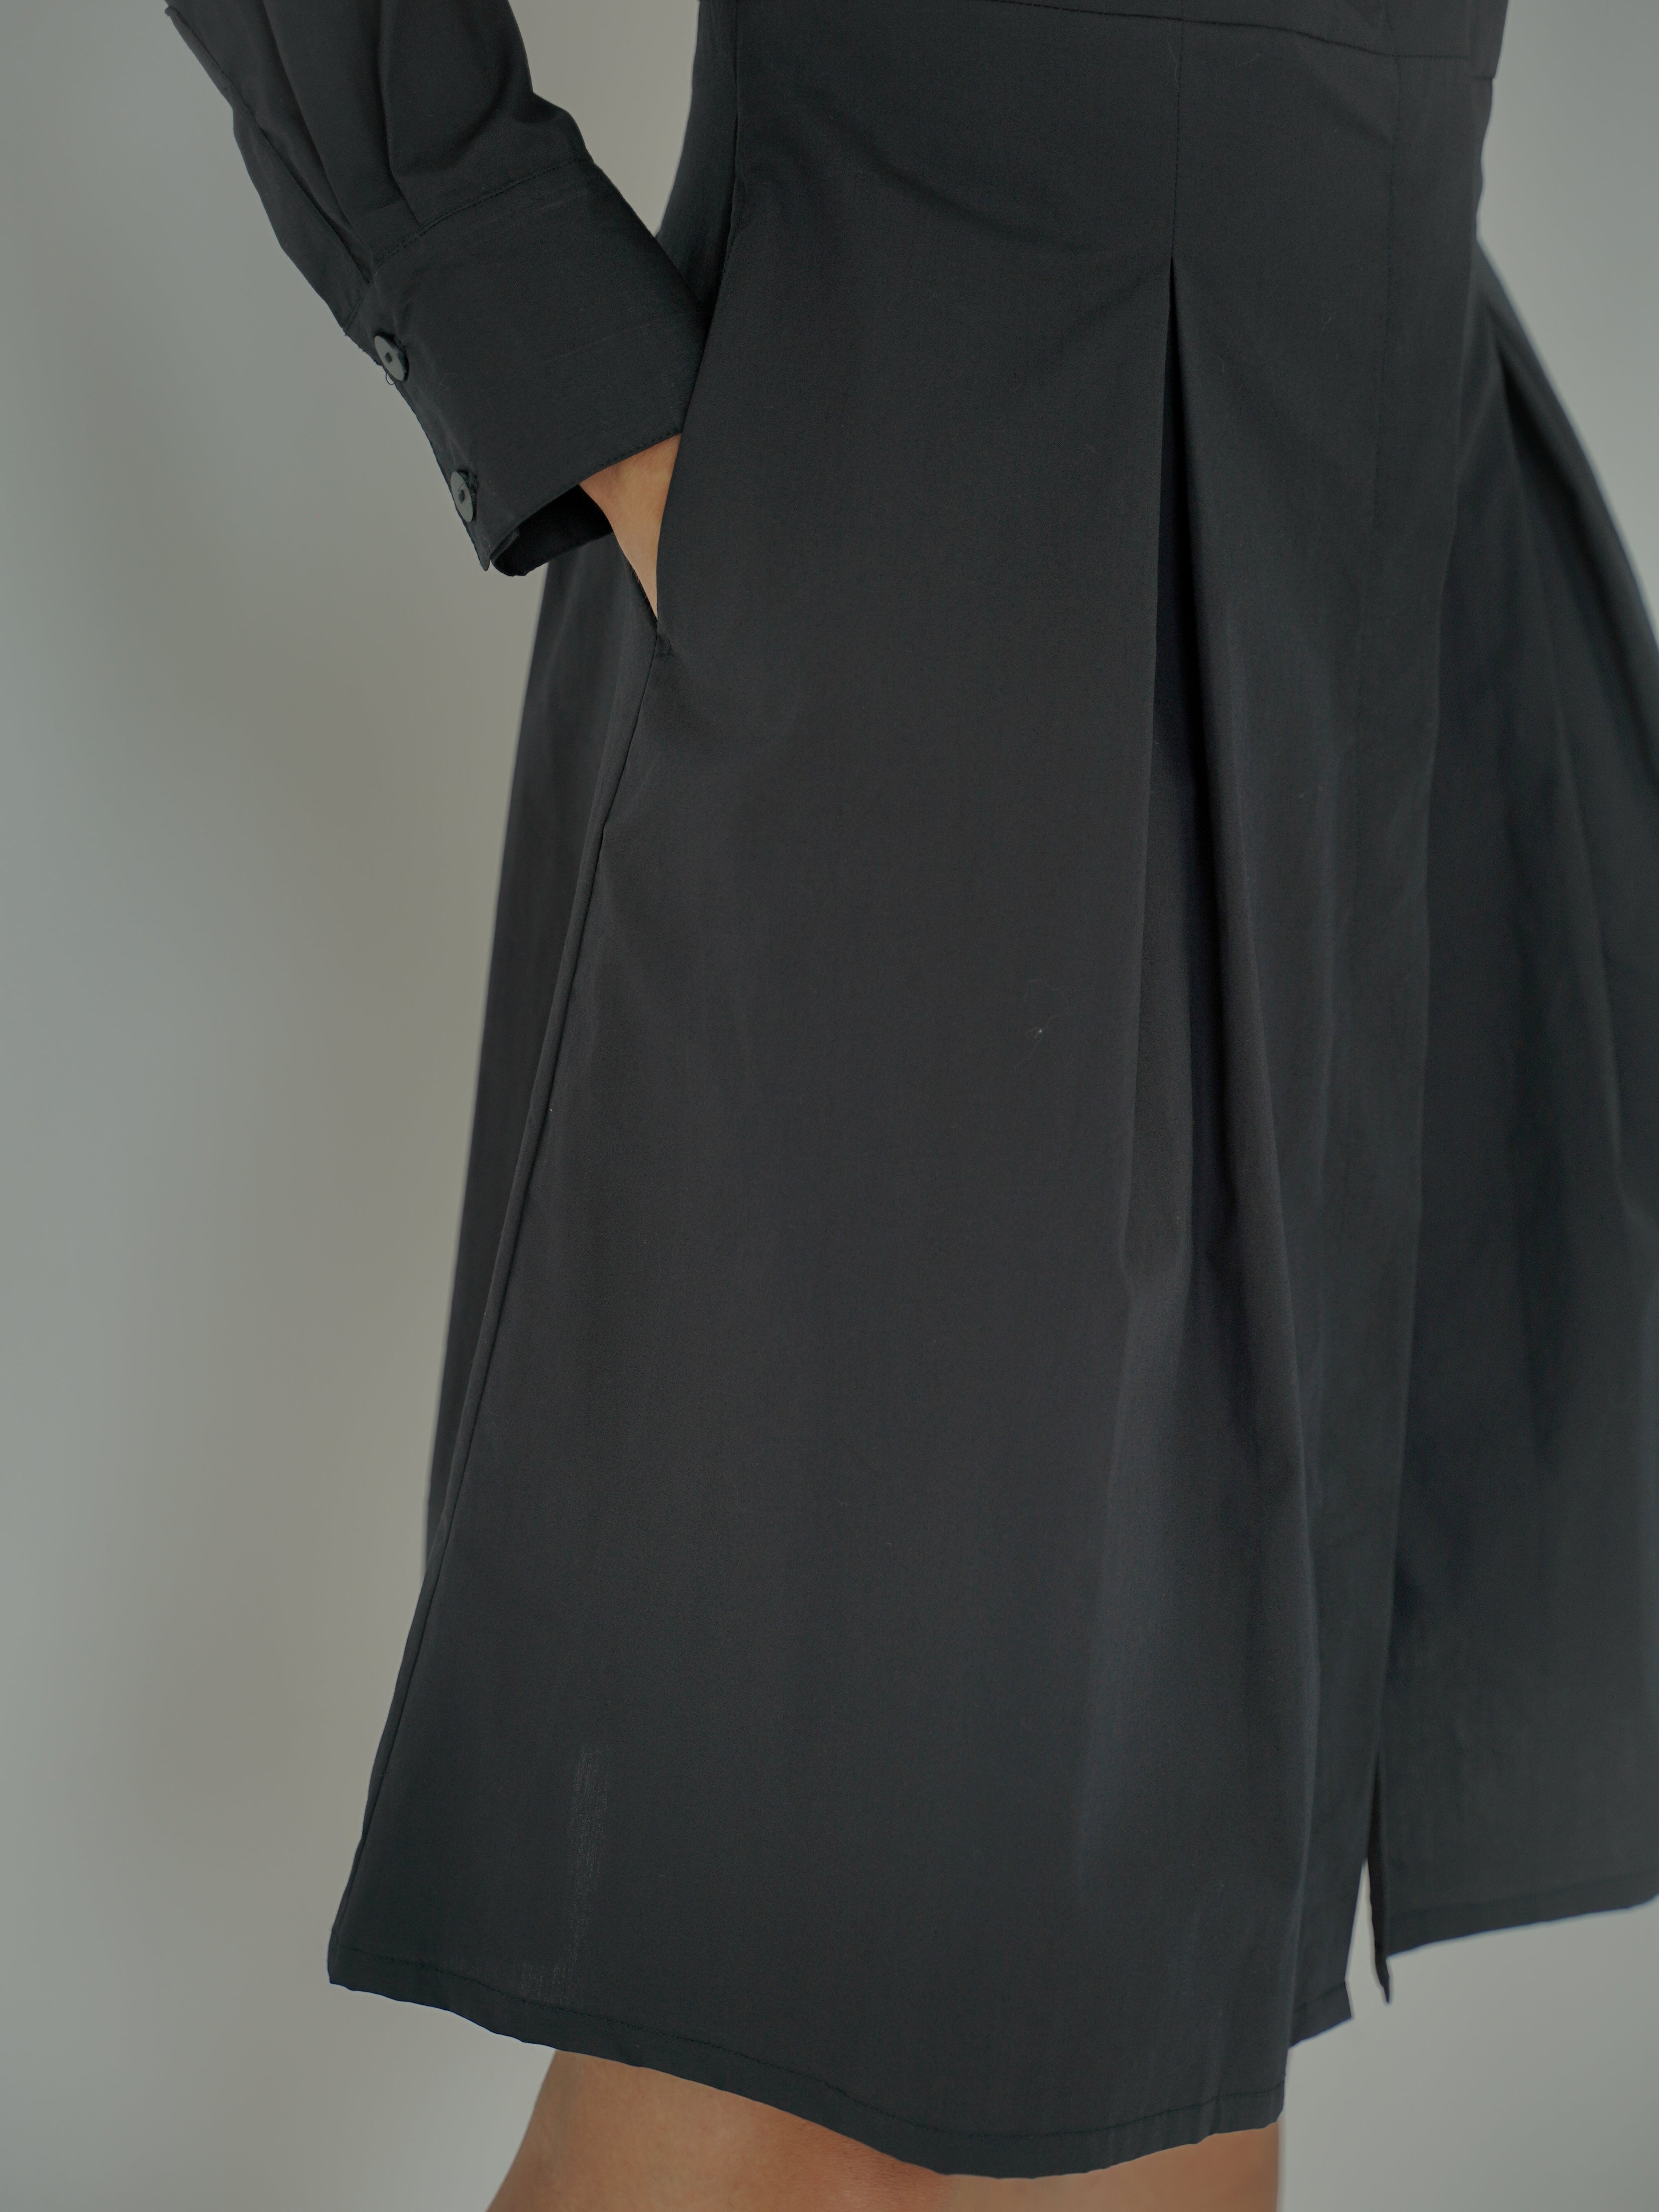 Ophelia Shirt Dress in Black - l u • c i e e